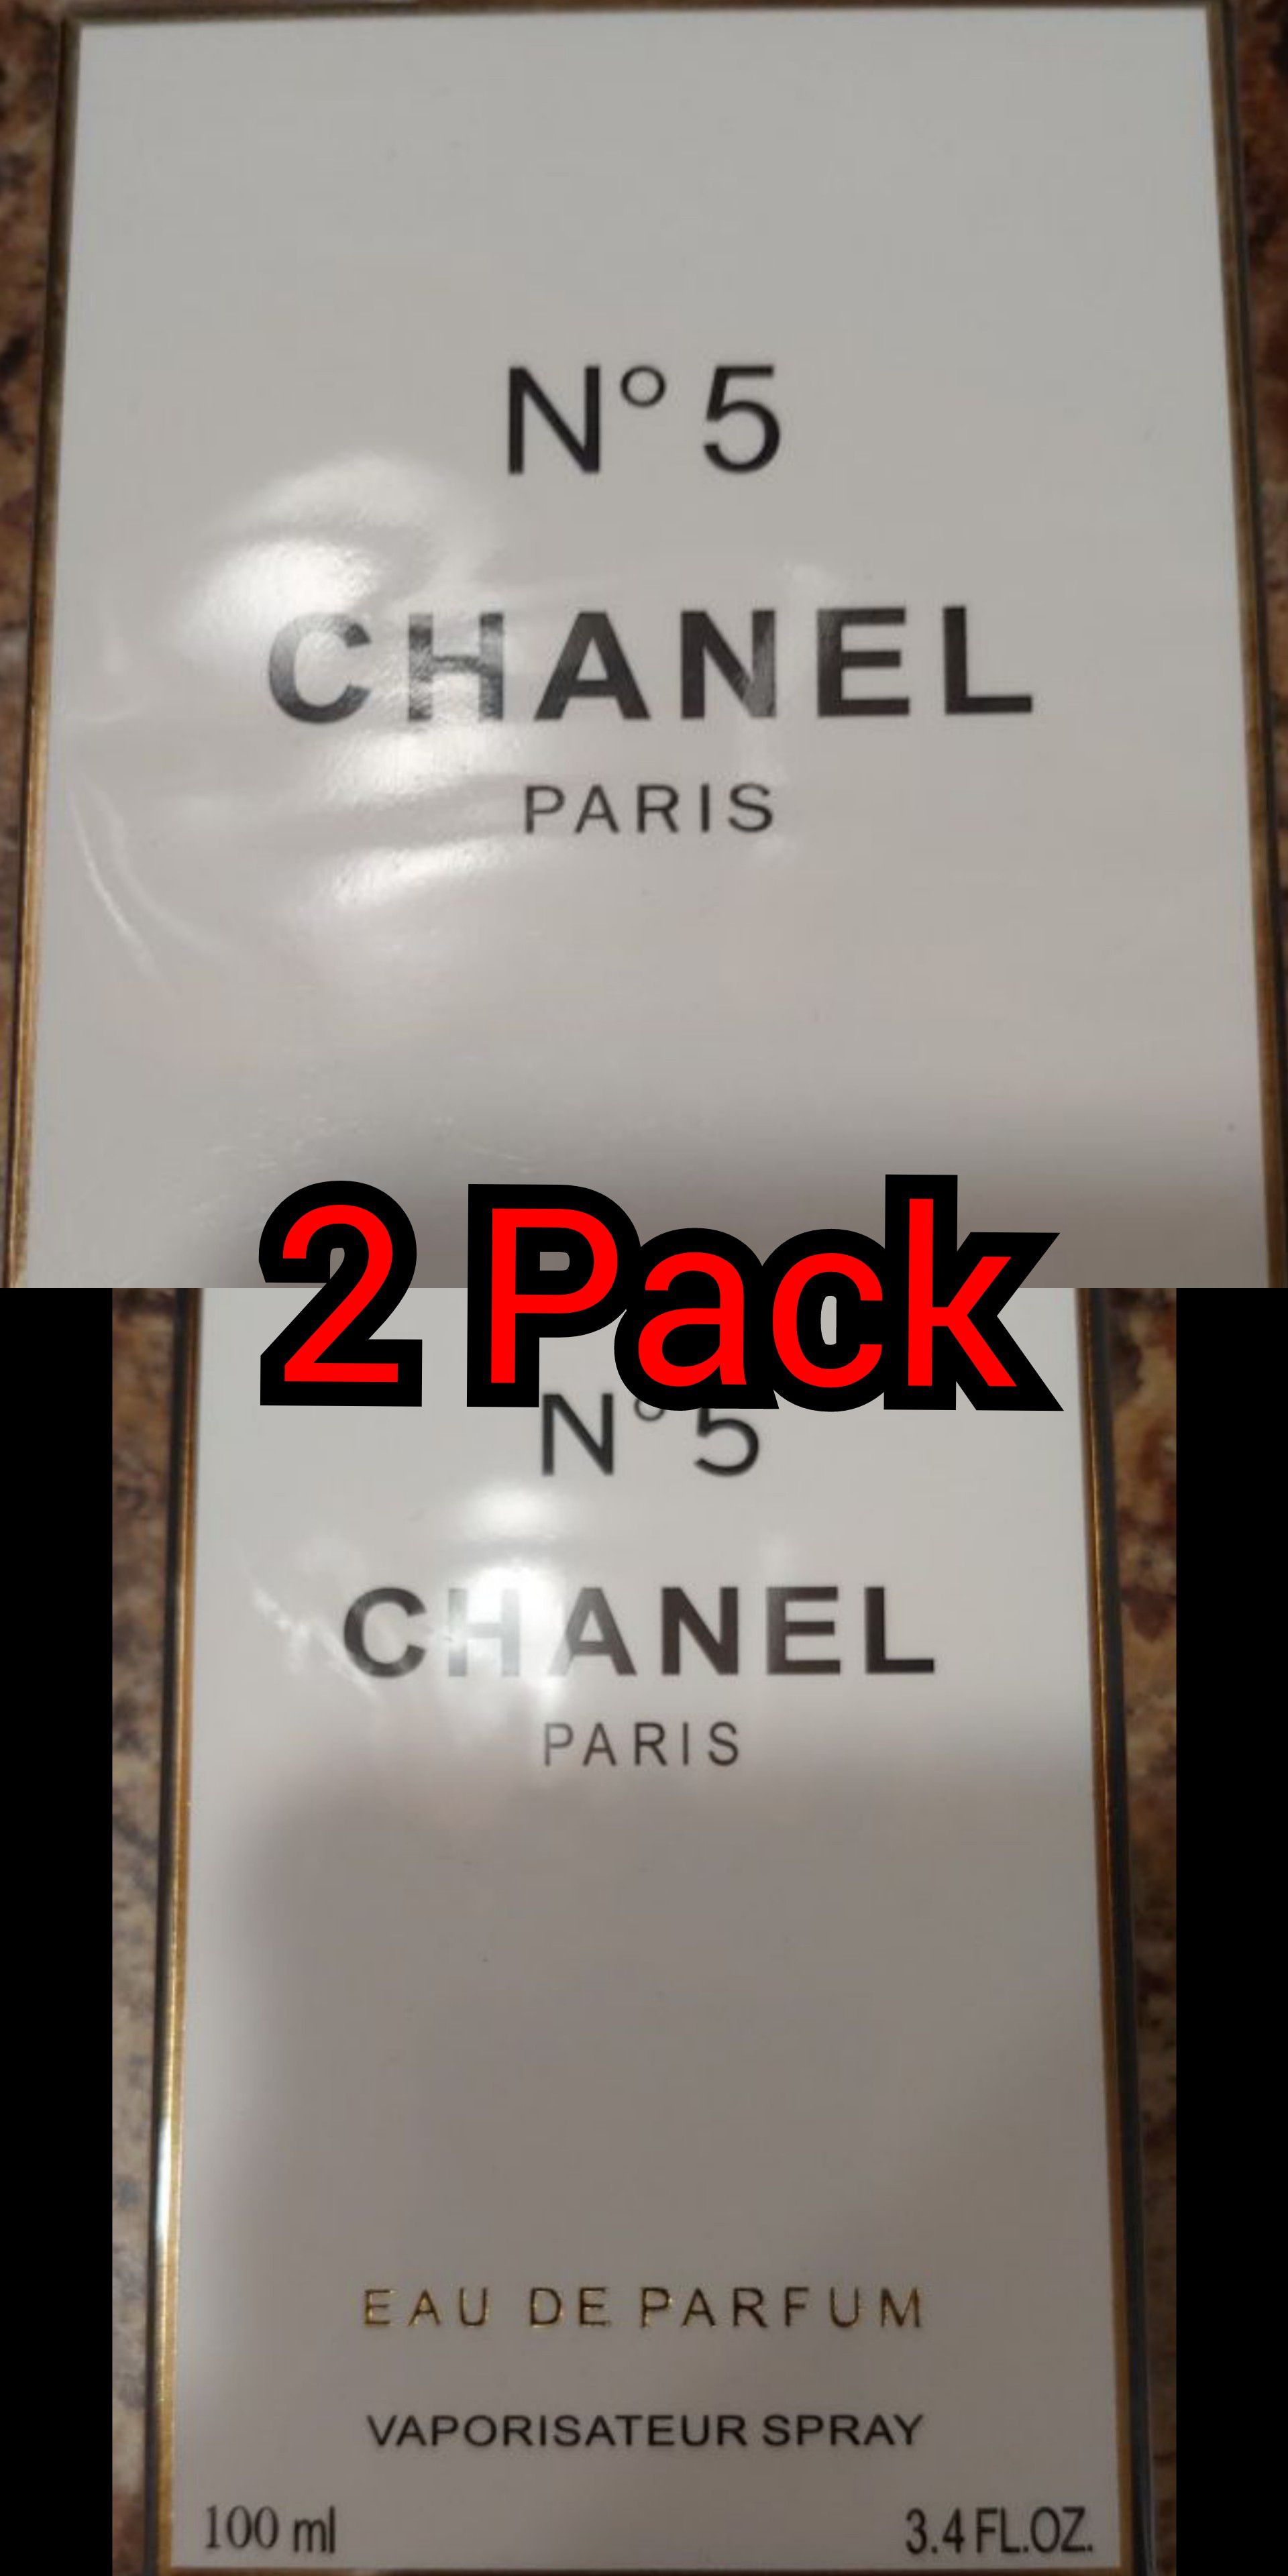 2 Pack - Chanel No 5 Women's Perfume - Each is 3.4 FL OZ